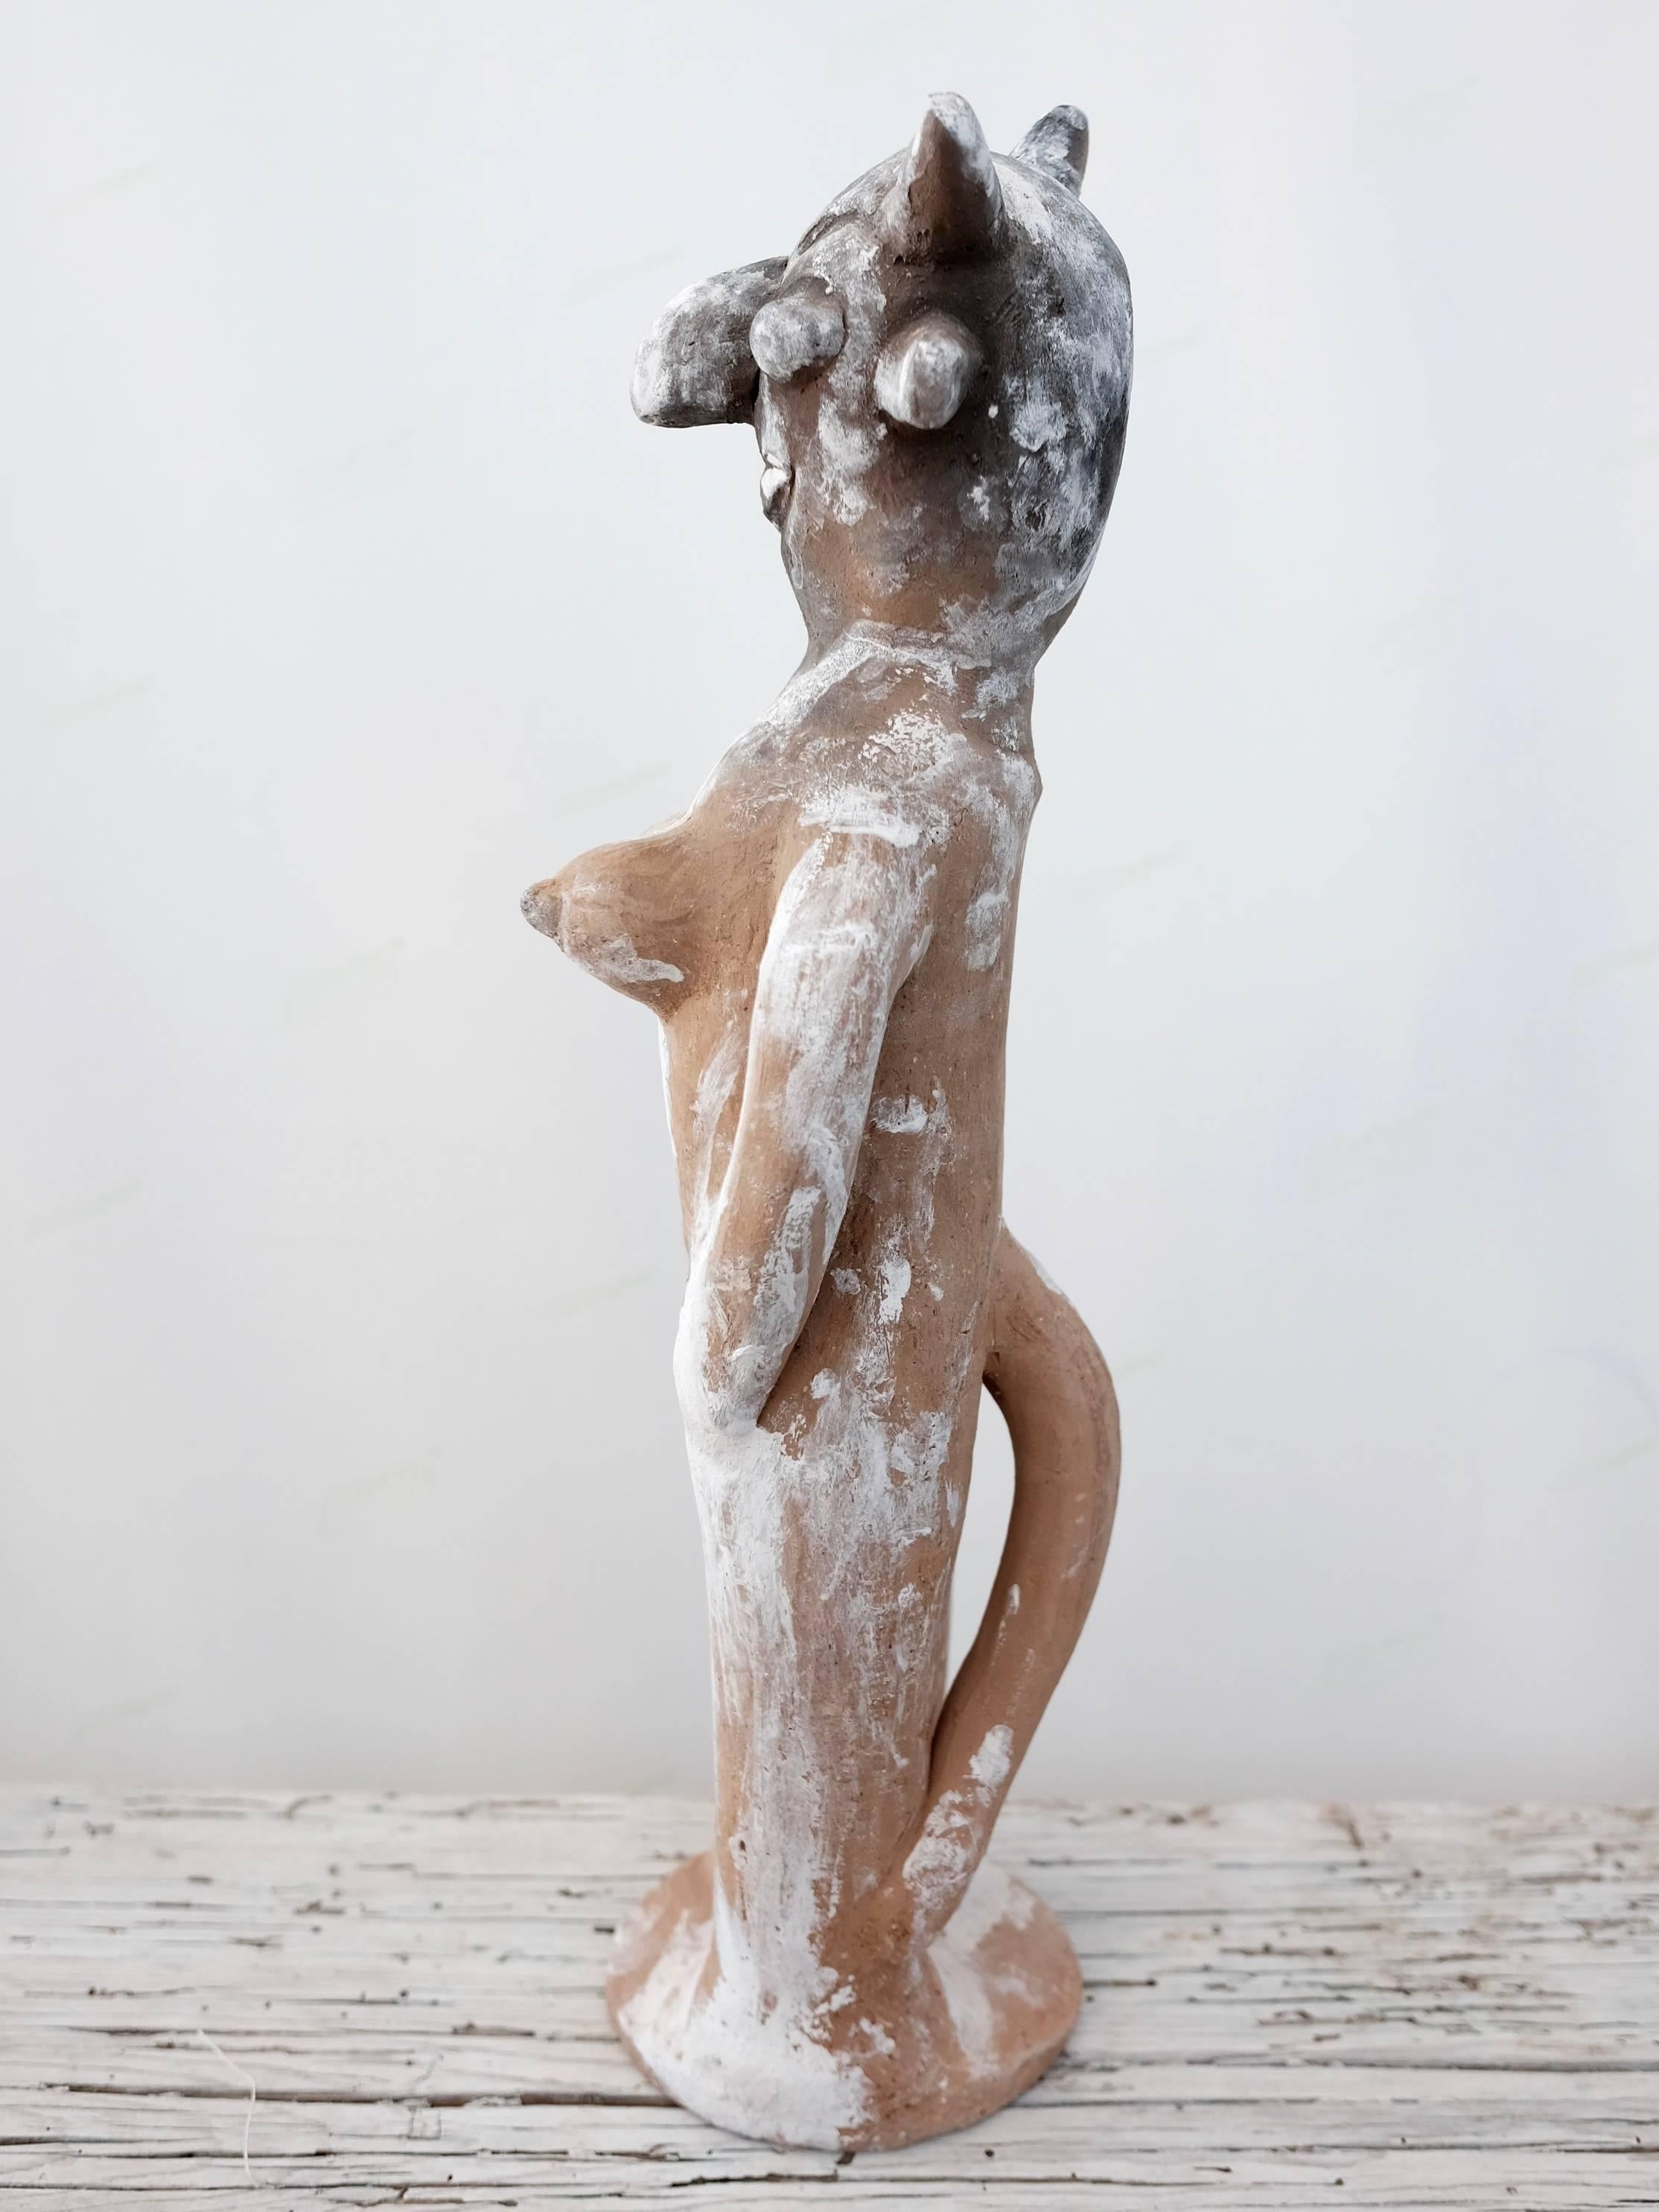 Mexican Contemporary Clay Sculpture by Serapio Medrano from Jalisco, Mexico